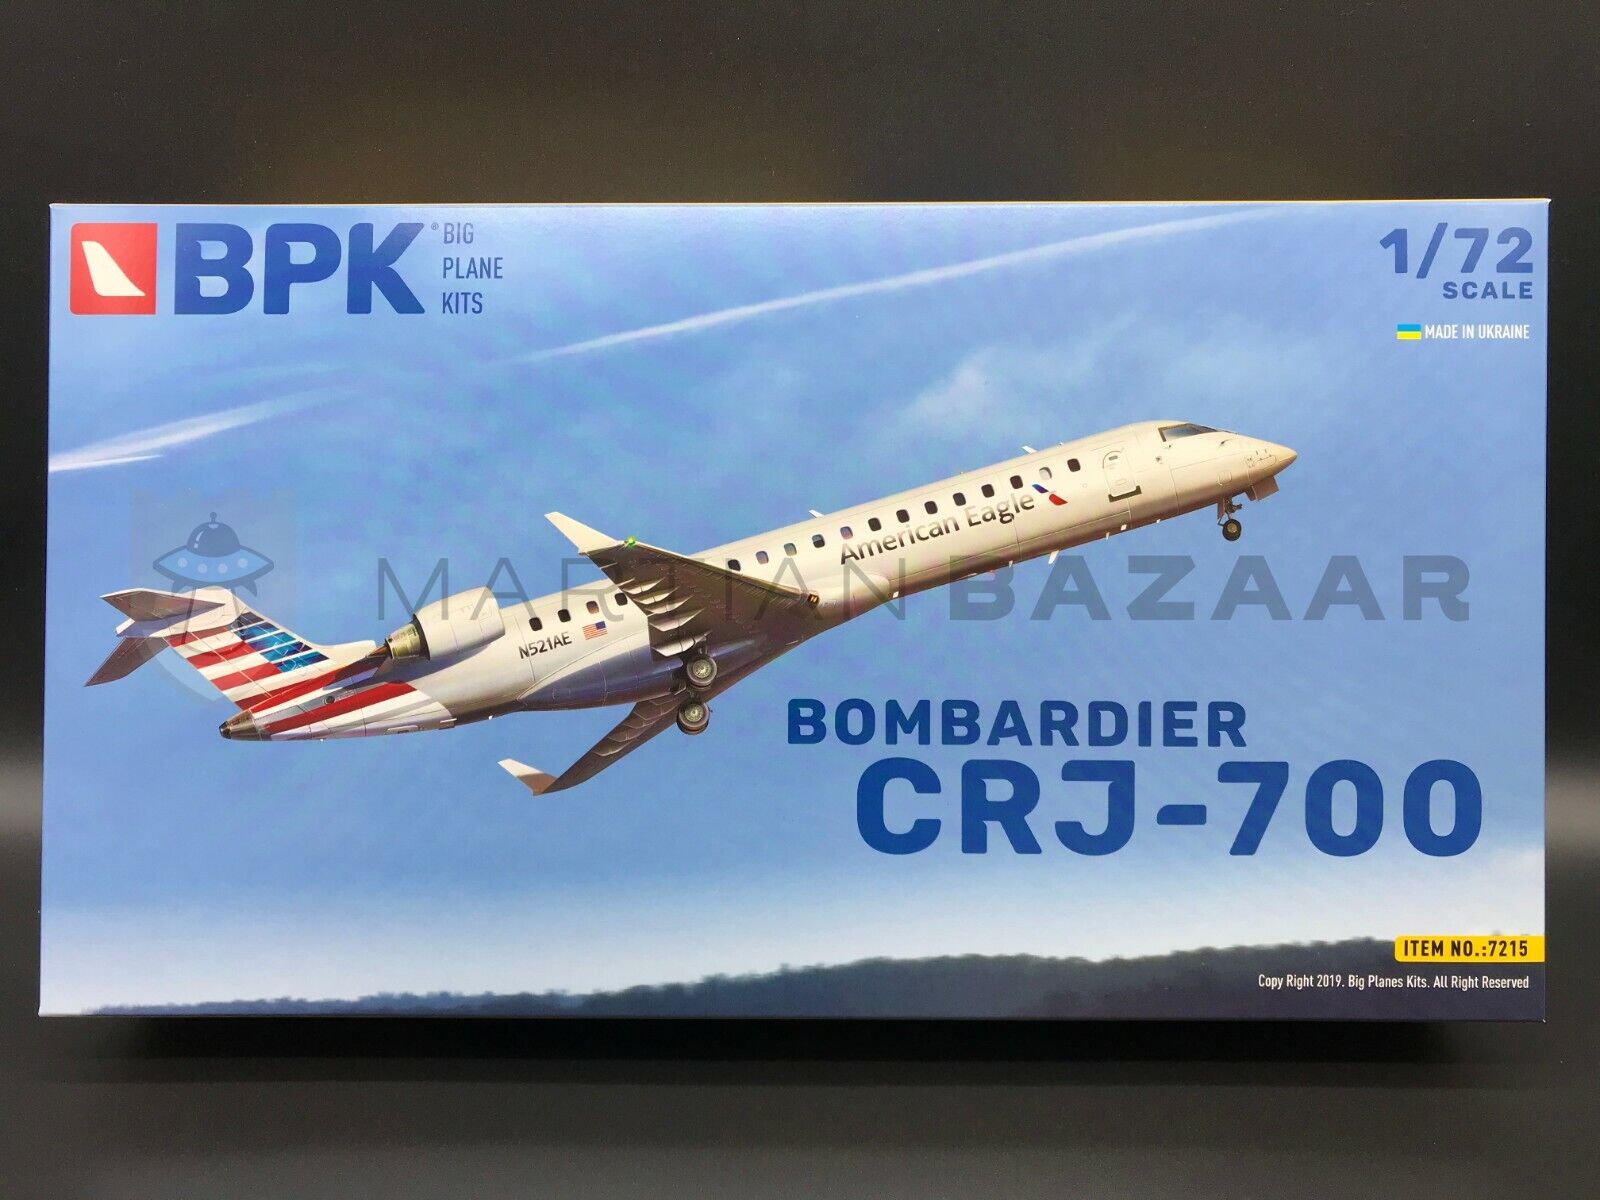 Bombardier Crj700 Wallpapers